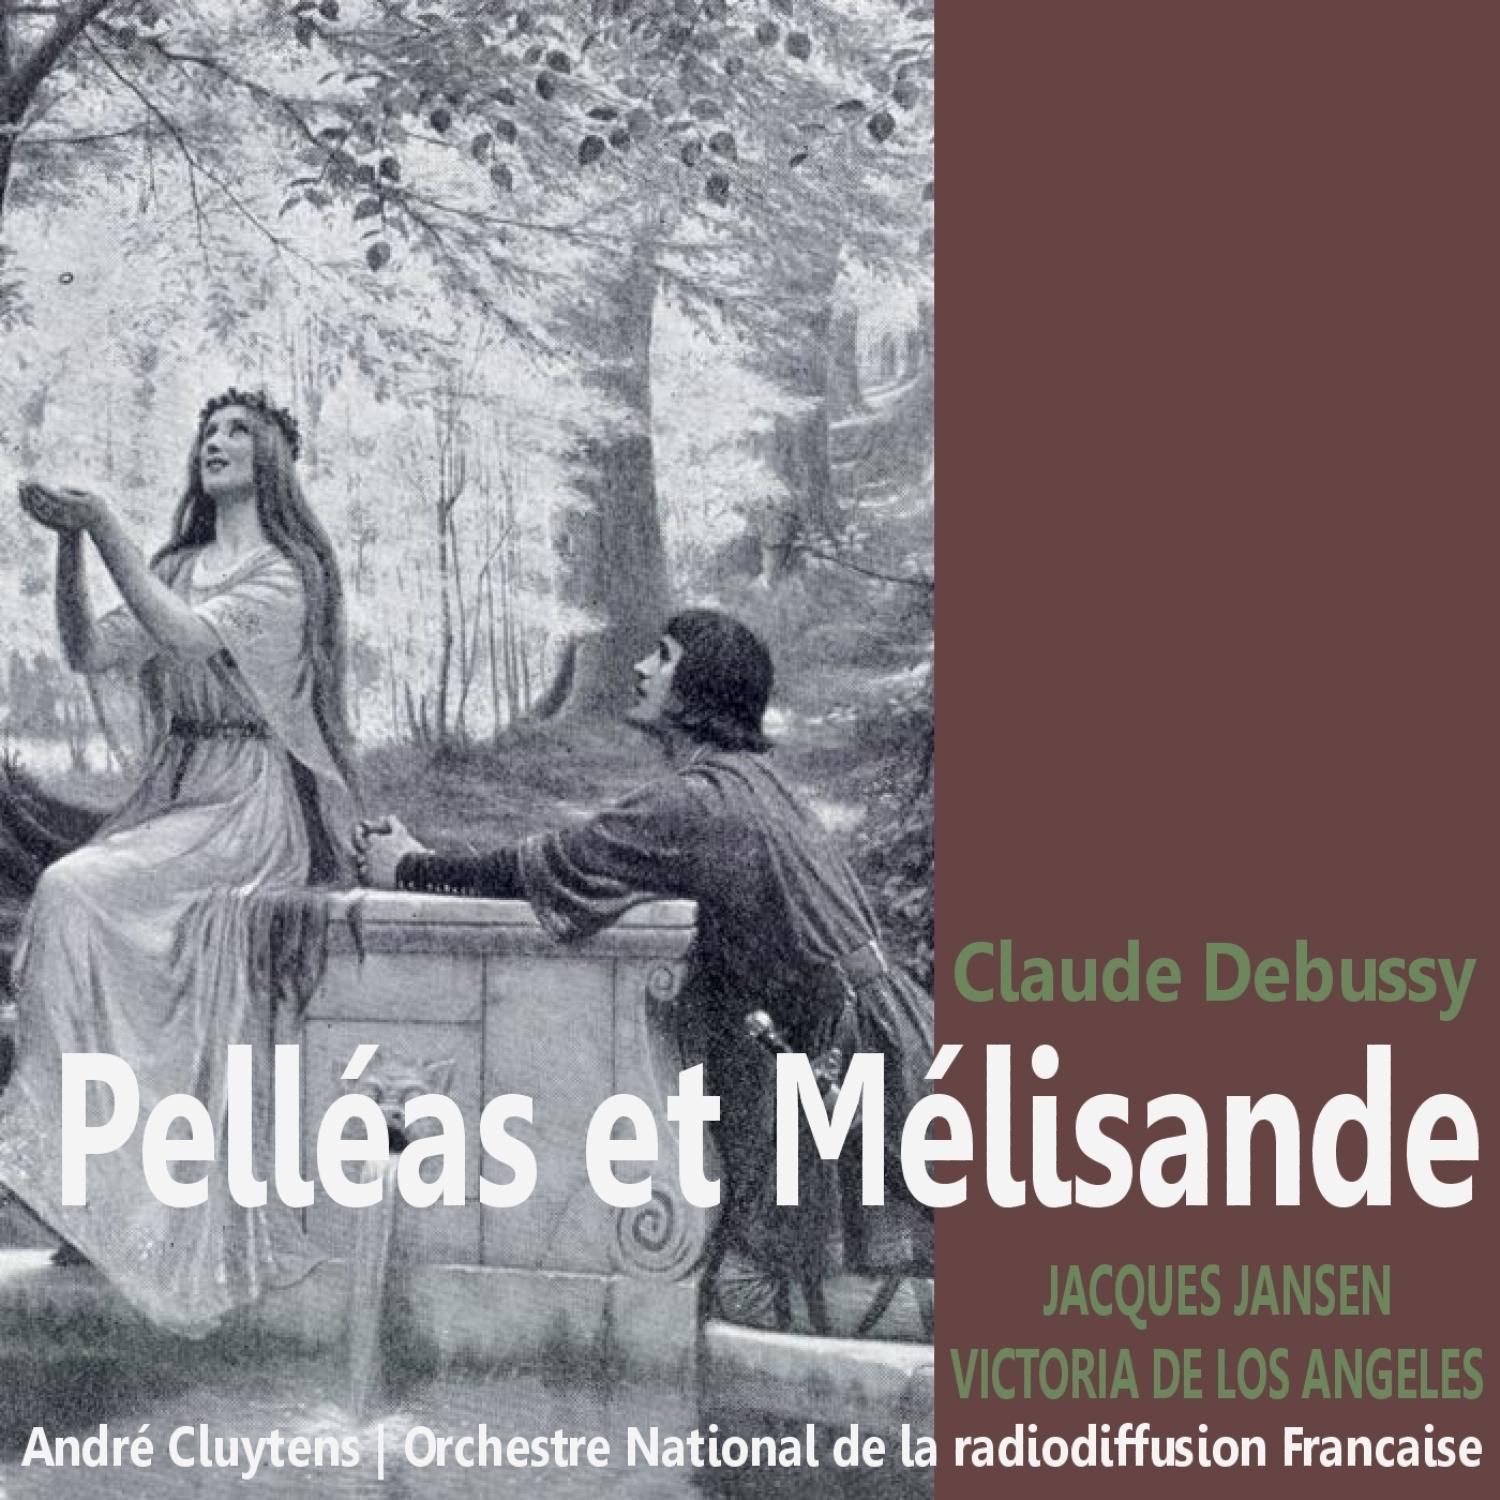 Debussy: Pelle as et Me lisande